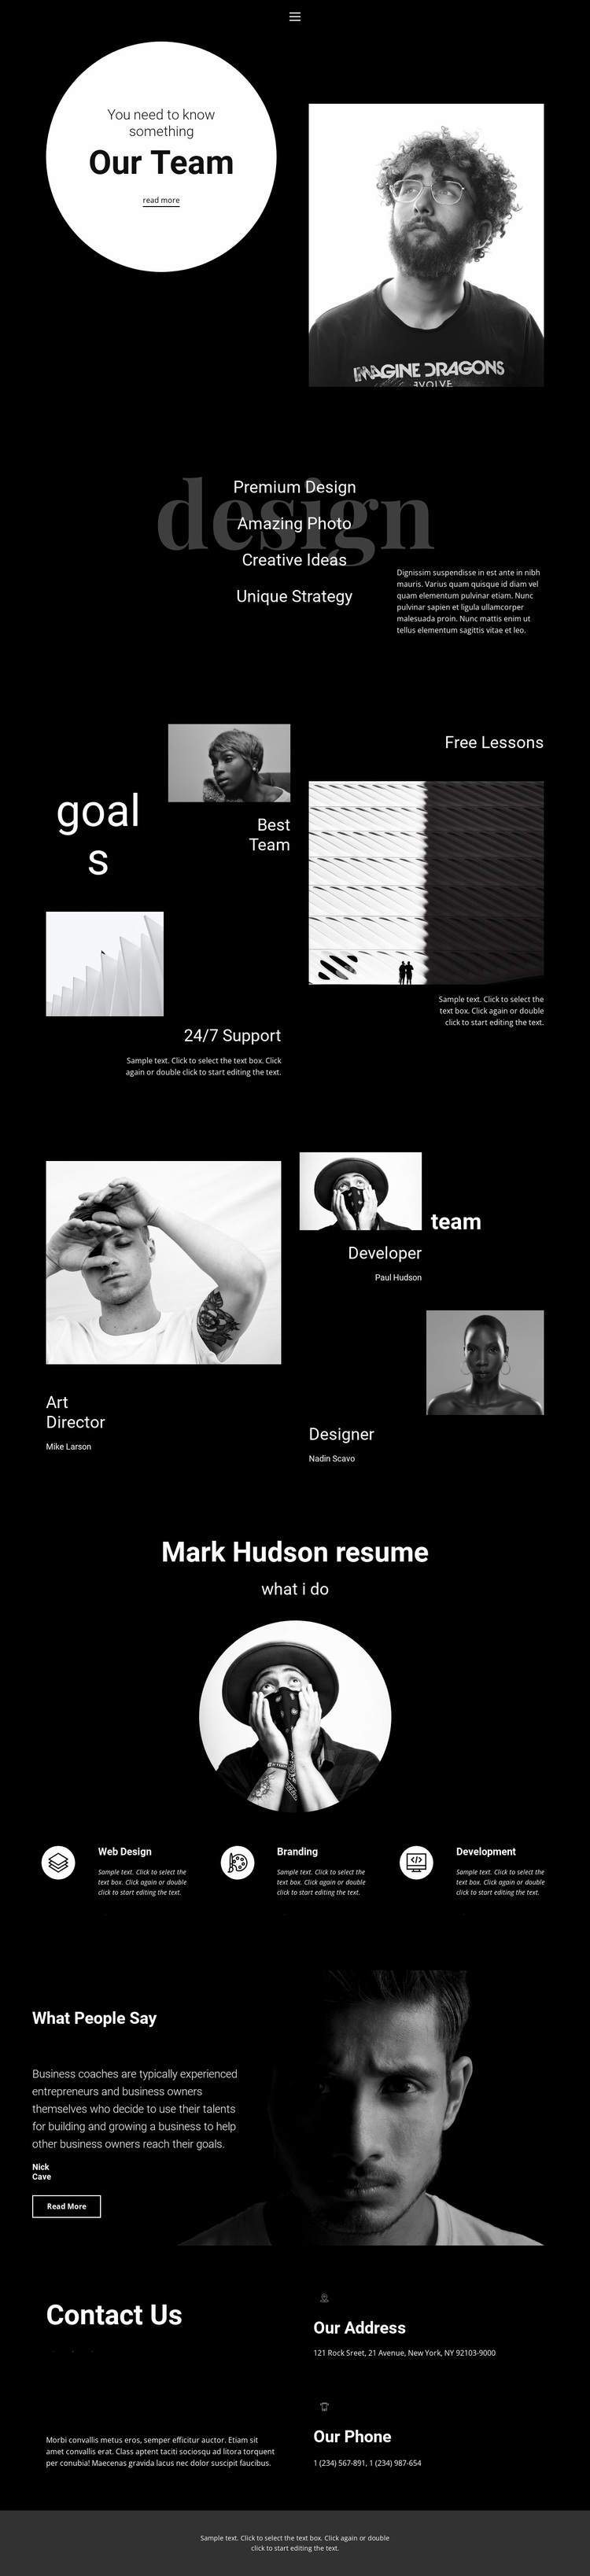 Design and development team Website Design